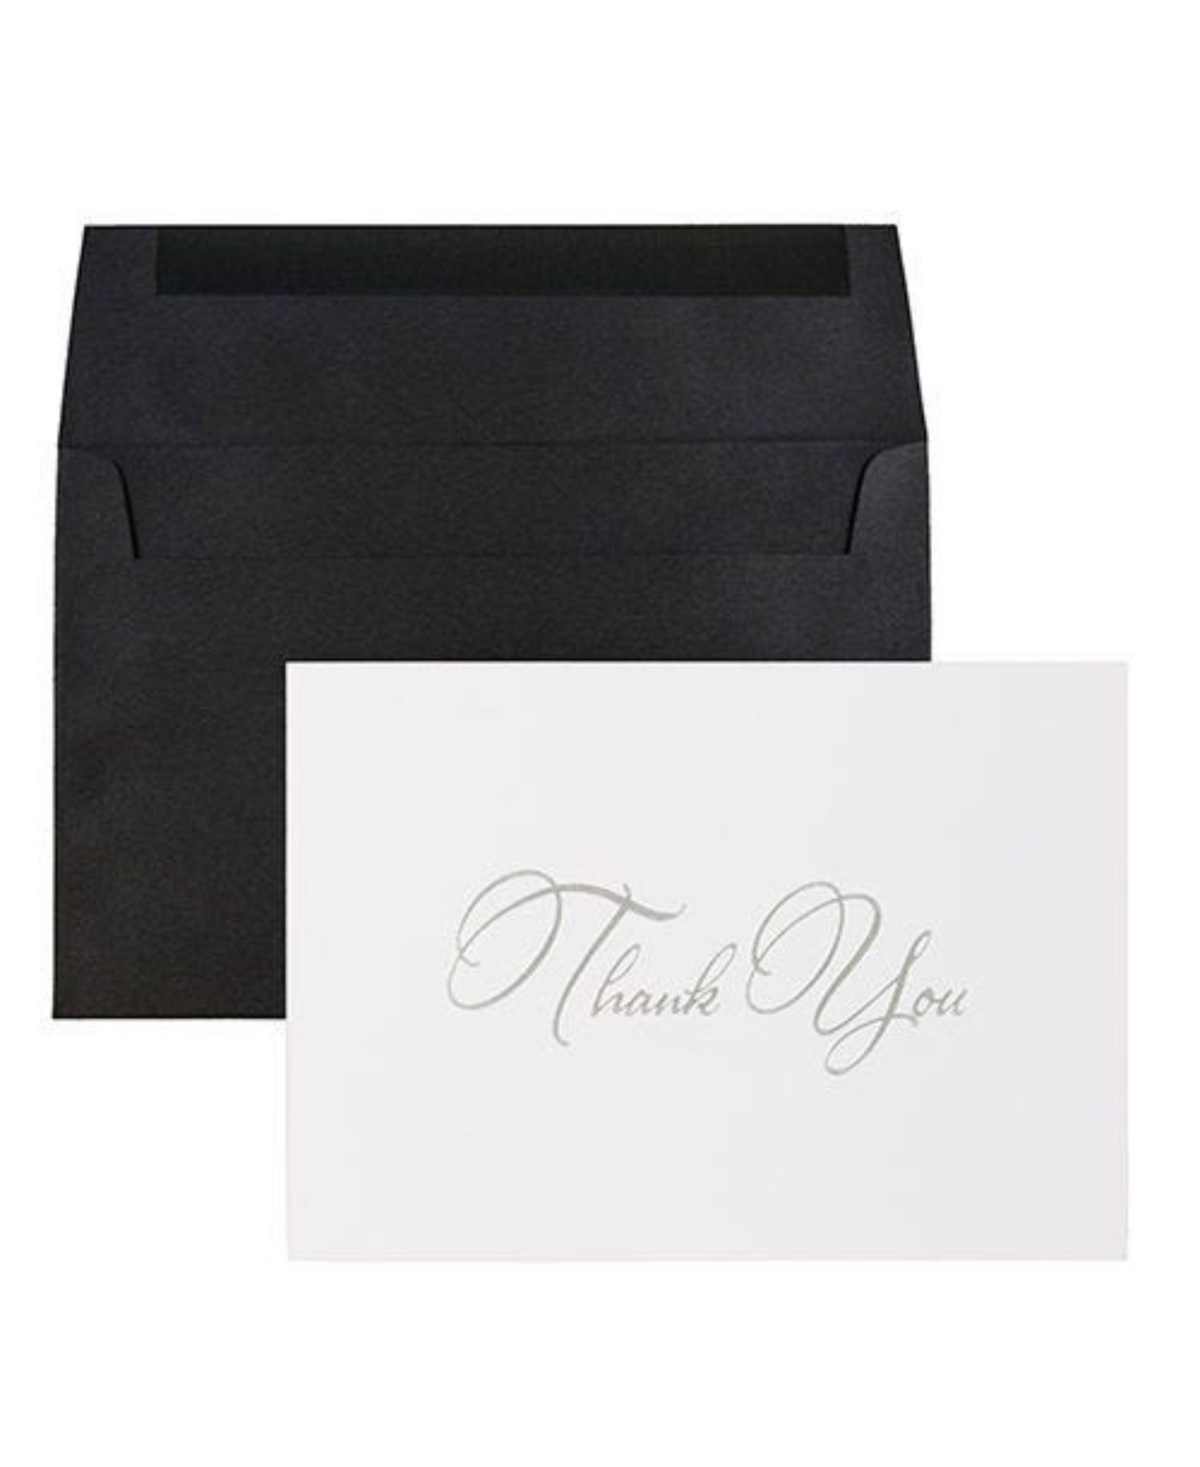 Jam Paper Thank You Card Sets In Silver Script Cards Black Linen Envelope